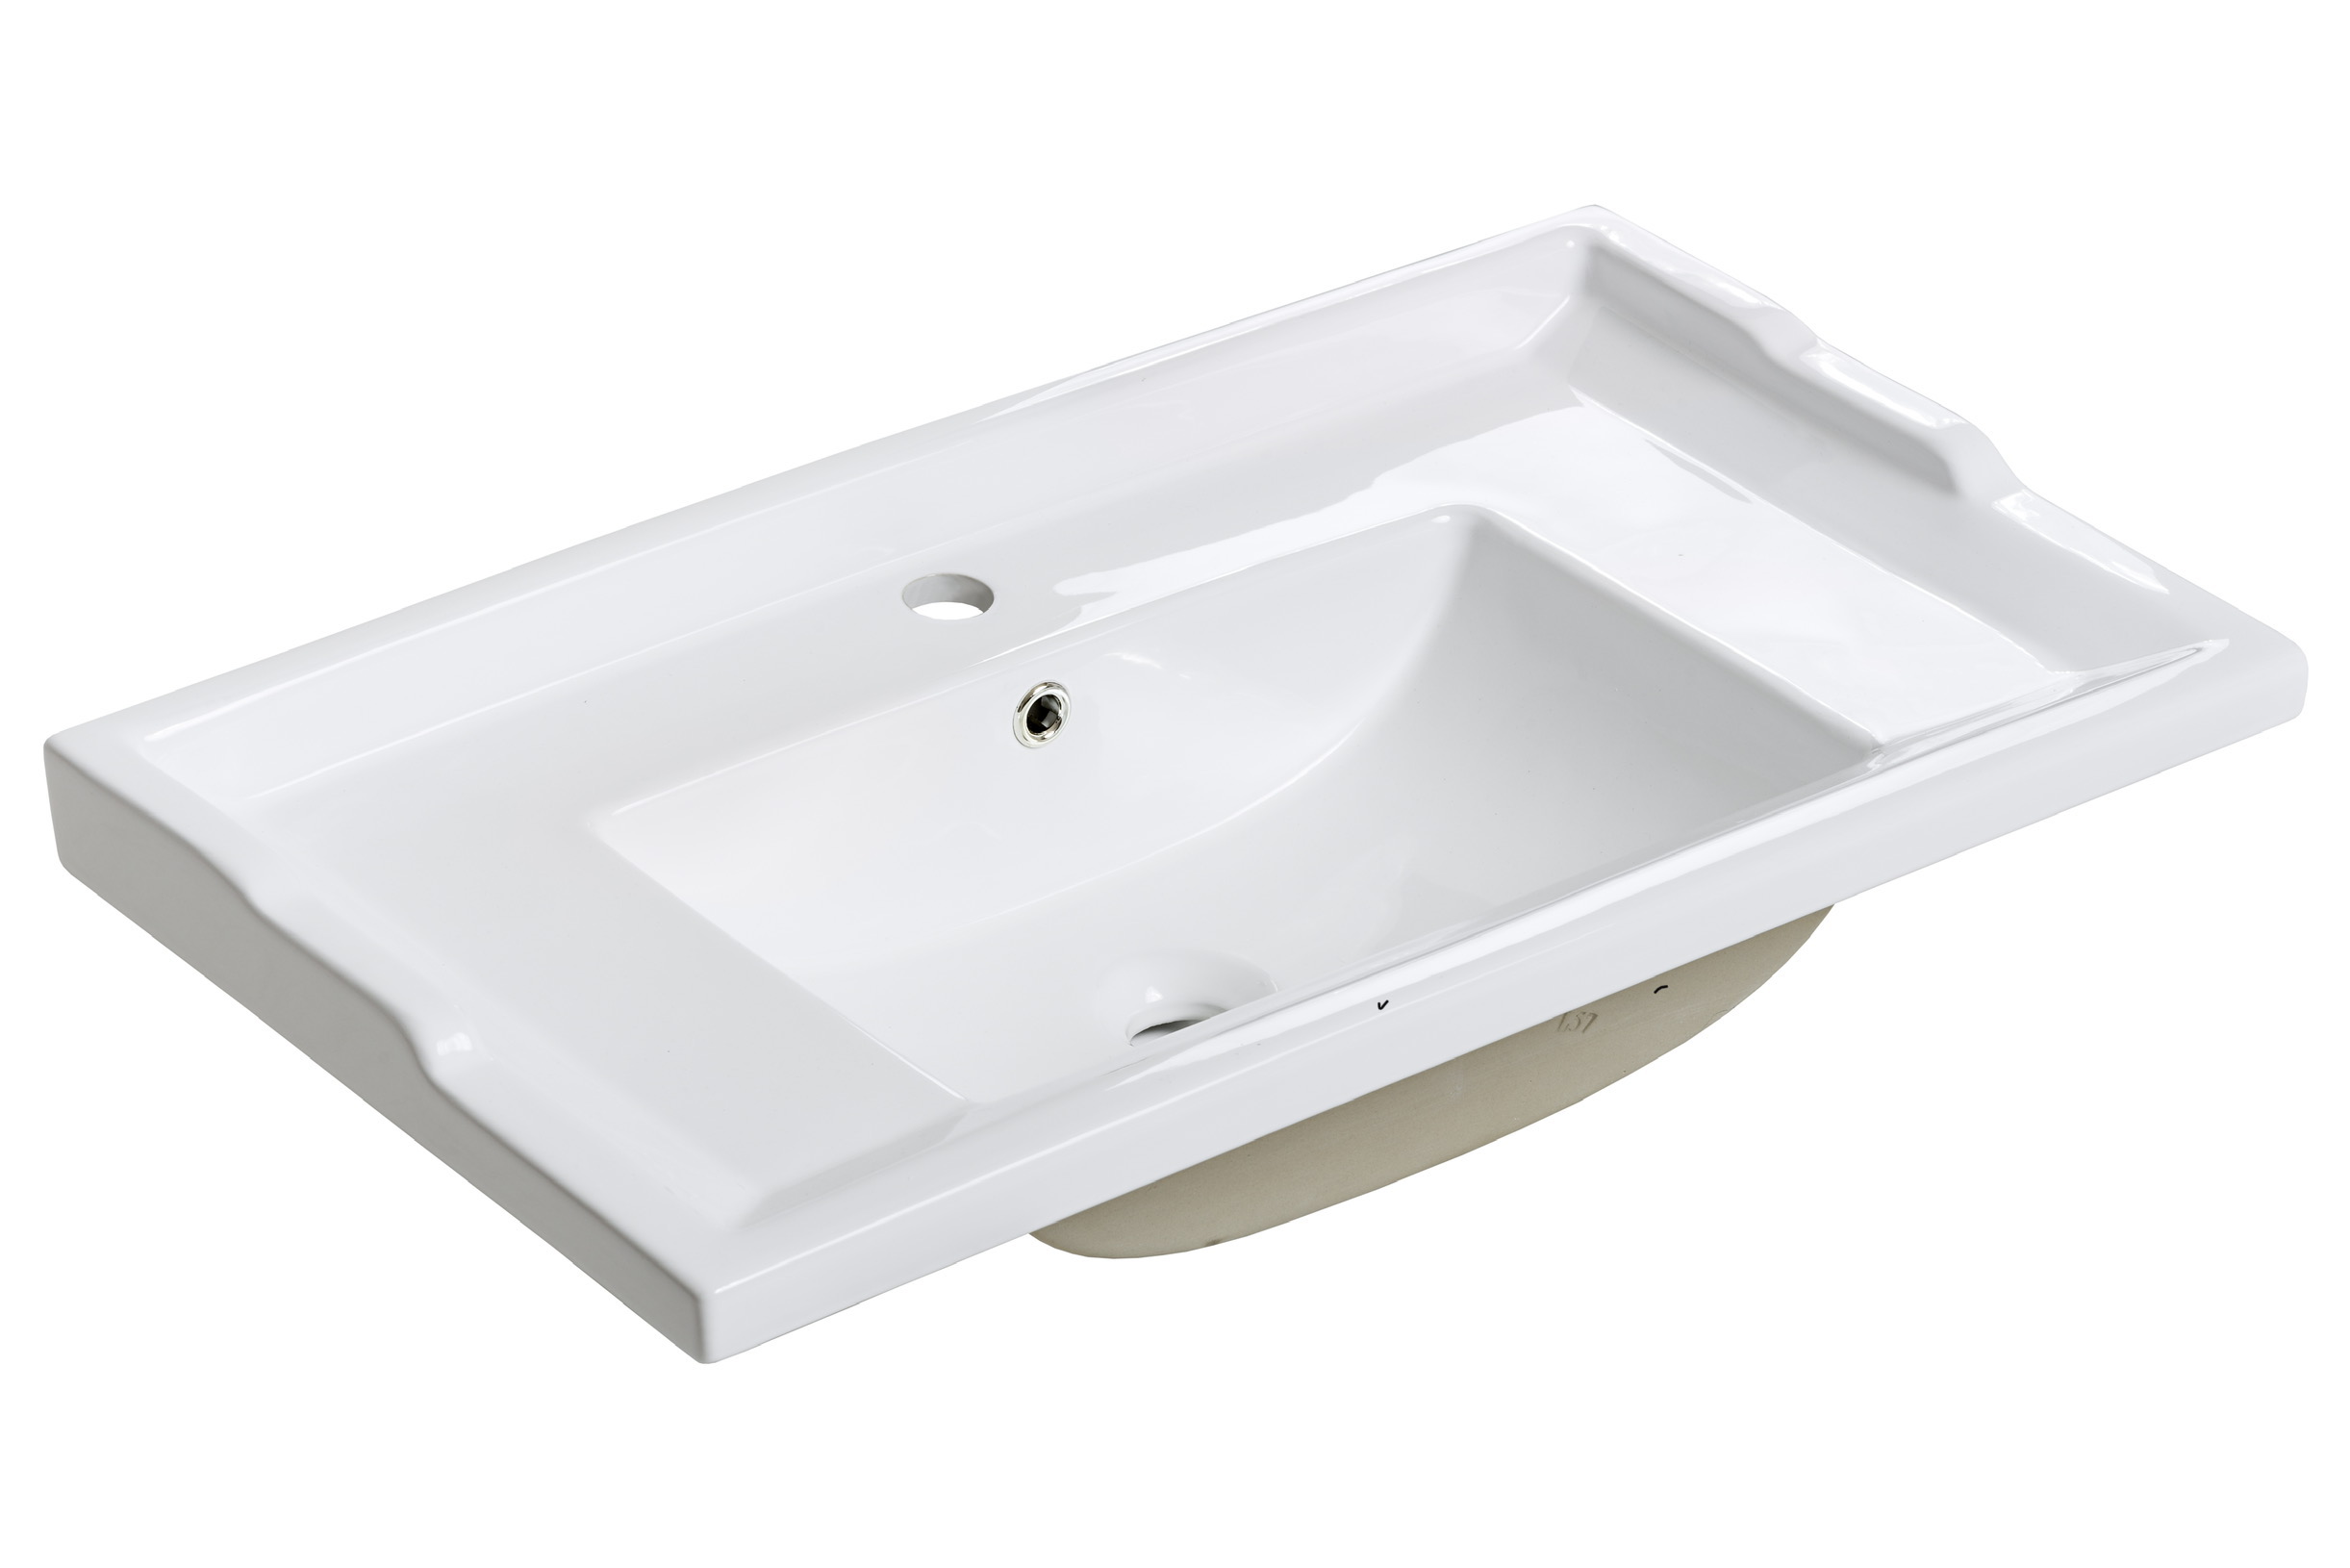 CFP - F80- RETRO- DP- umywalka ceramiczna 80cm / washbasine 80cm double pack